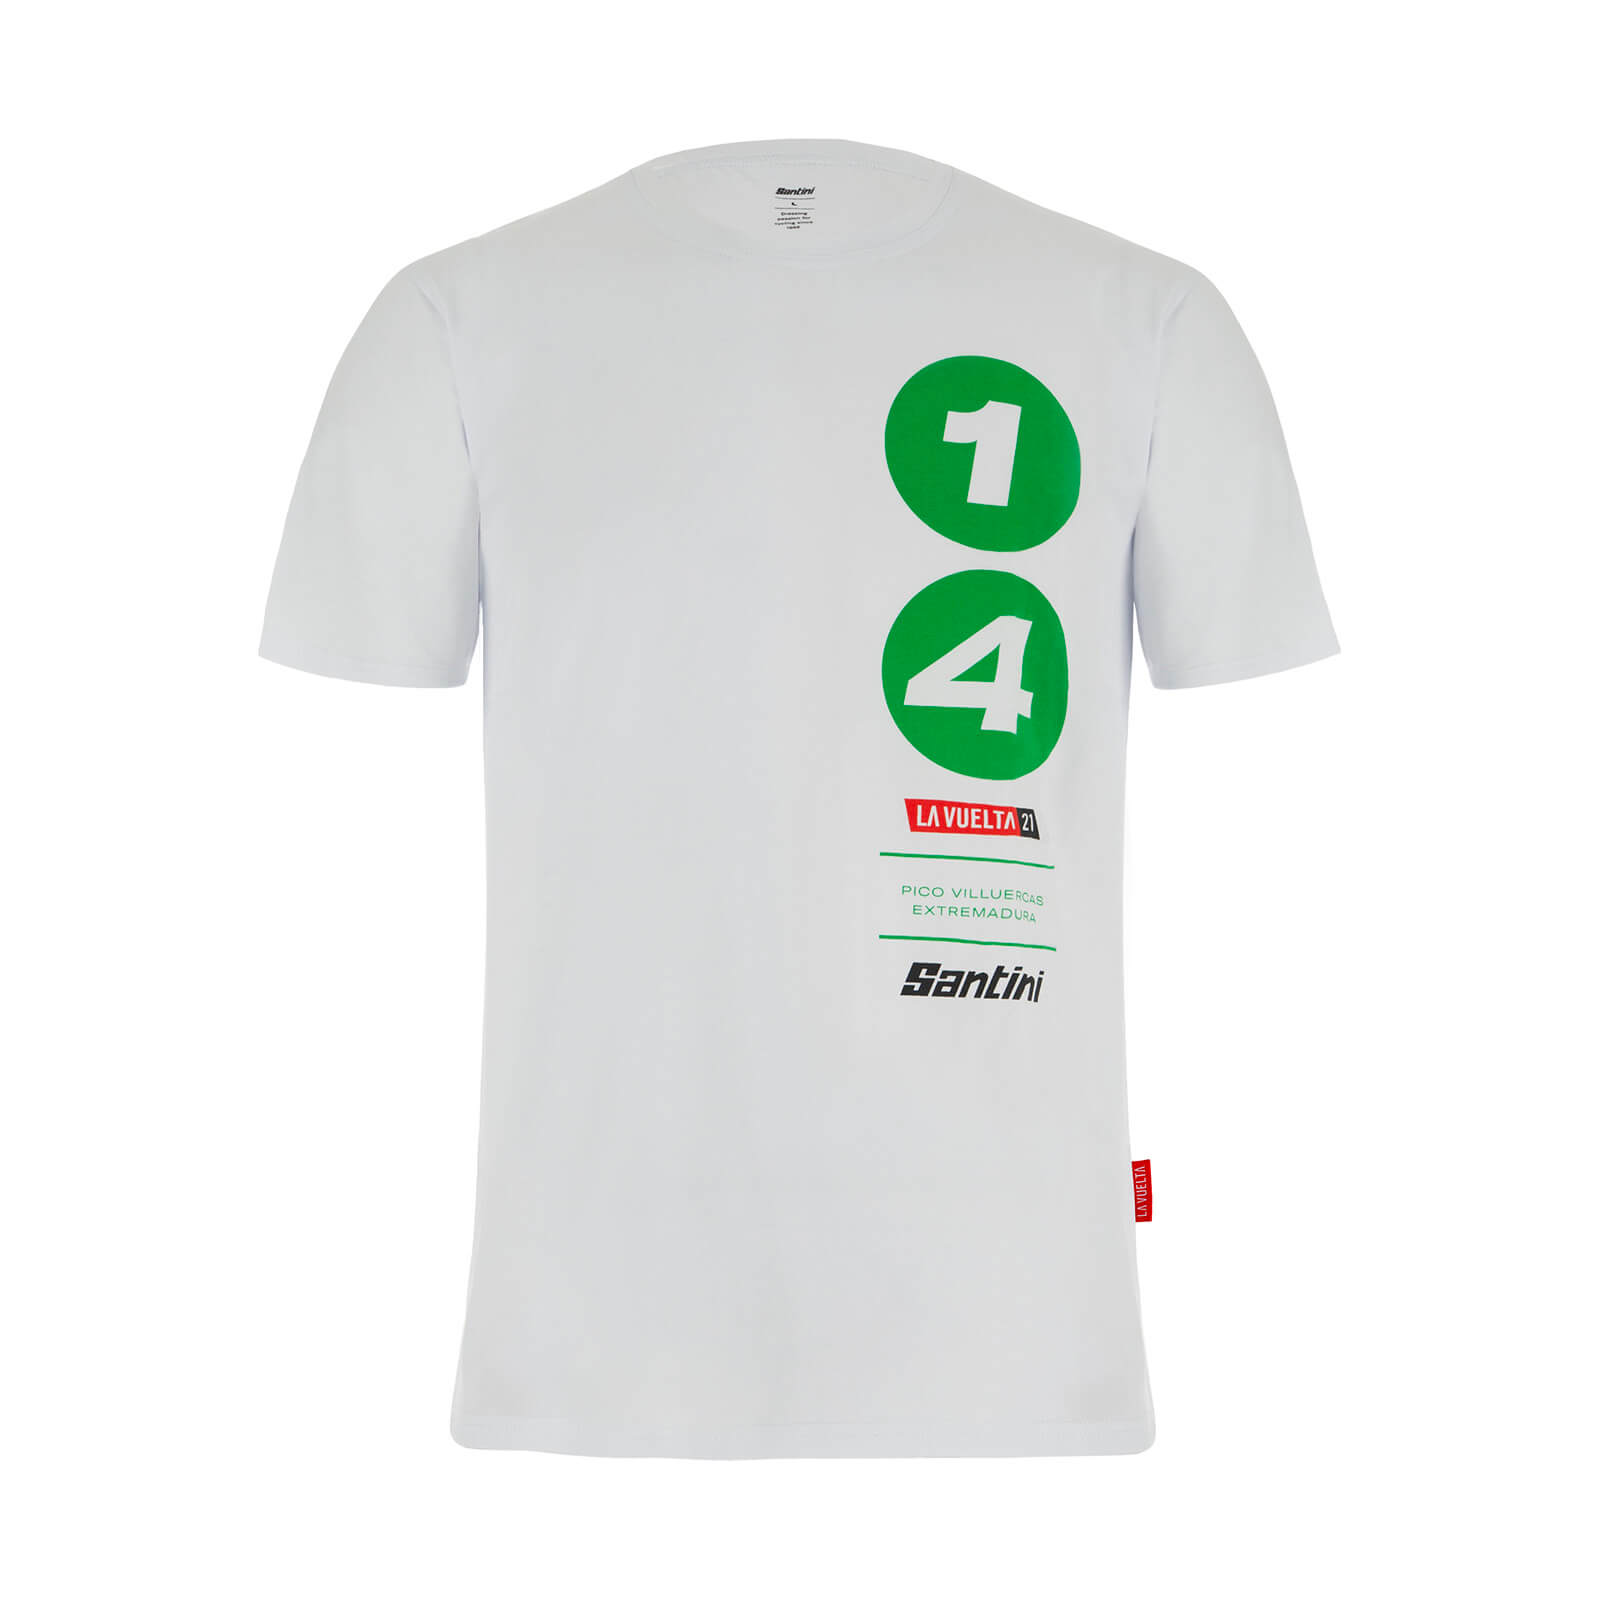 Santini La Vuelta 2021 Extremadura T-Shirt - XXL